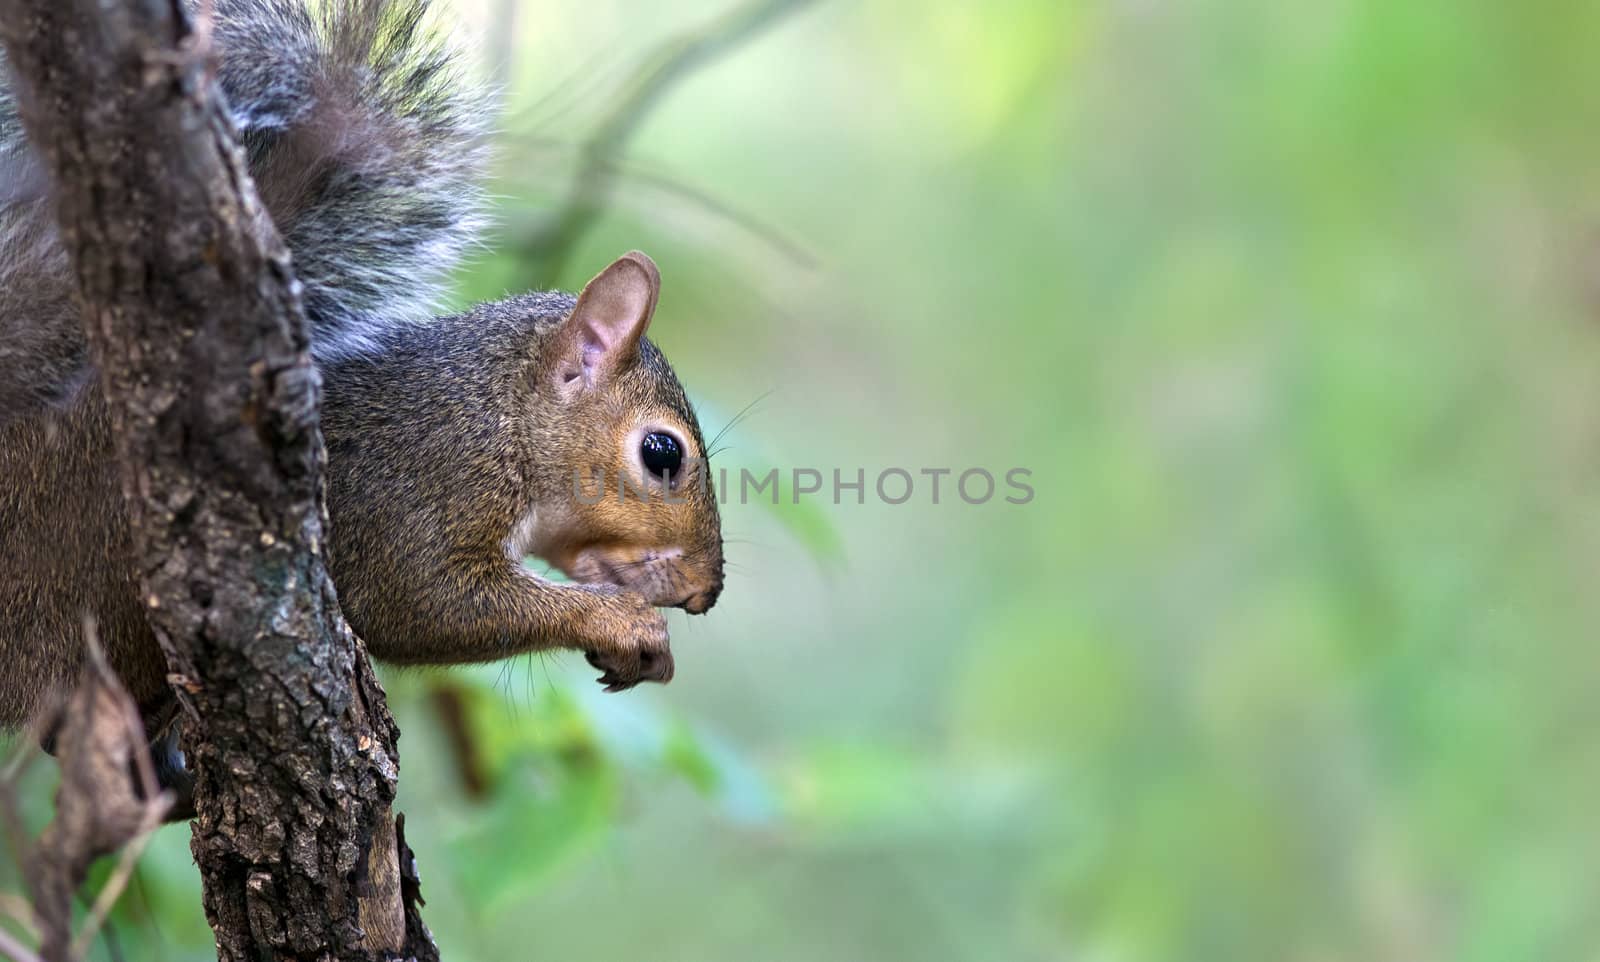 Squirrel in a Tree by macropixel